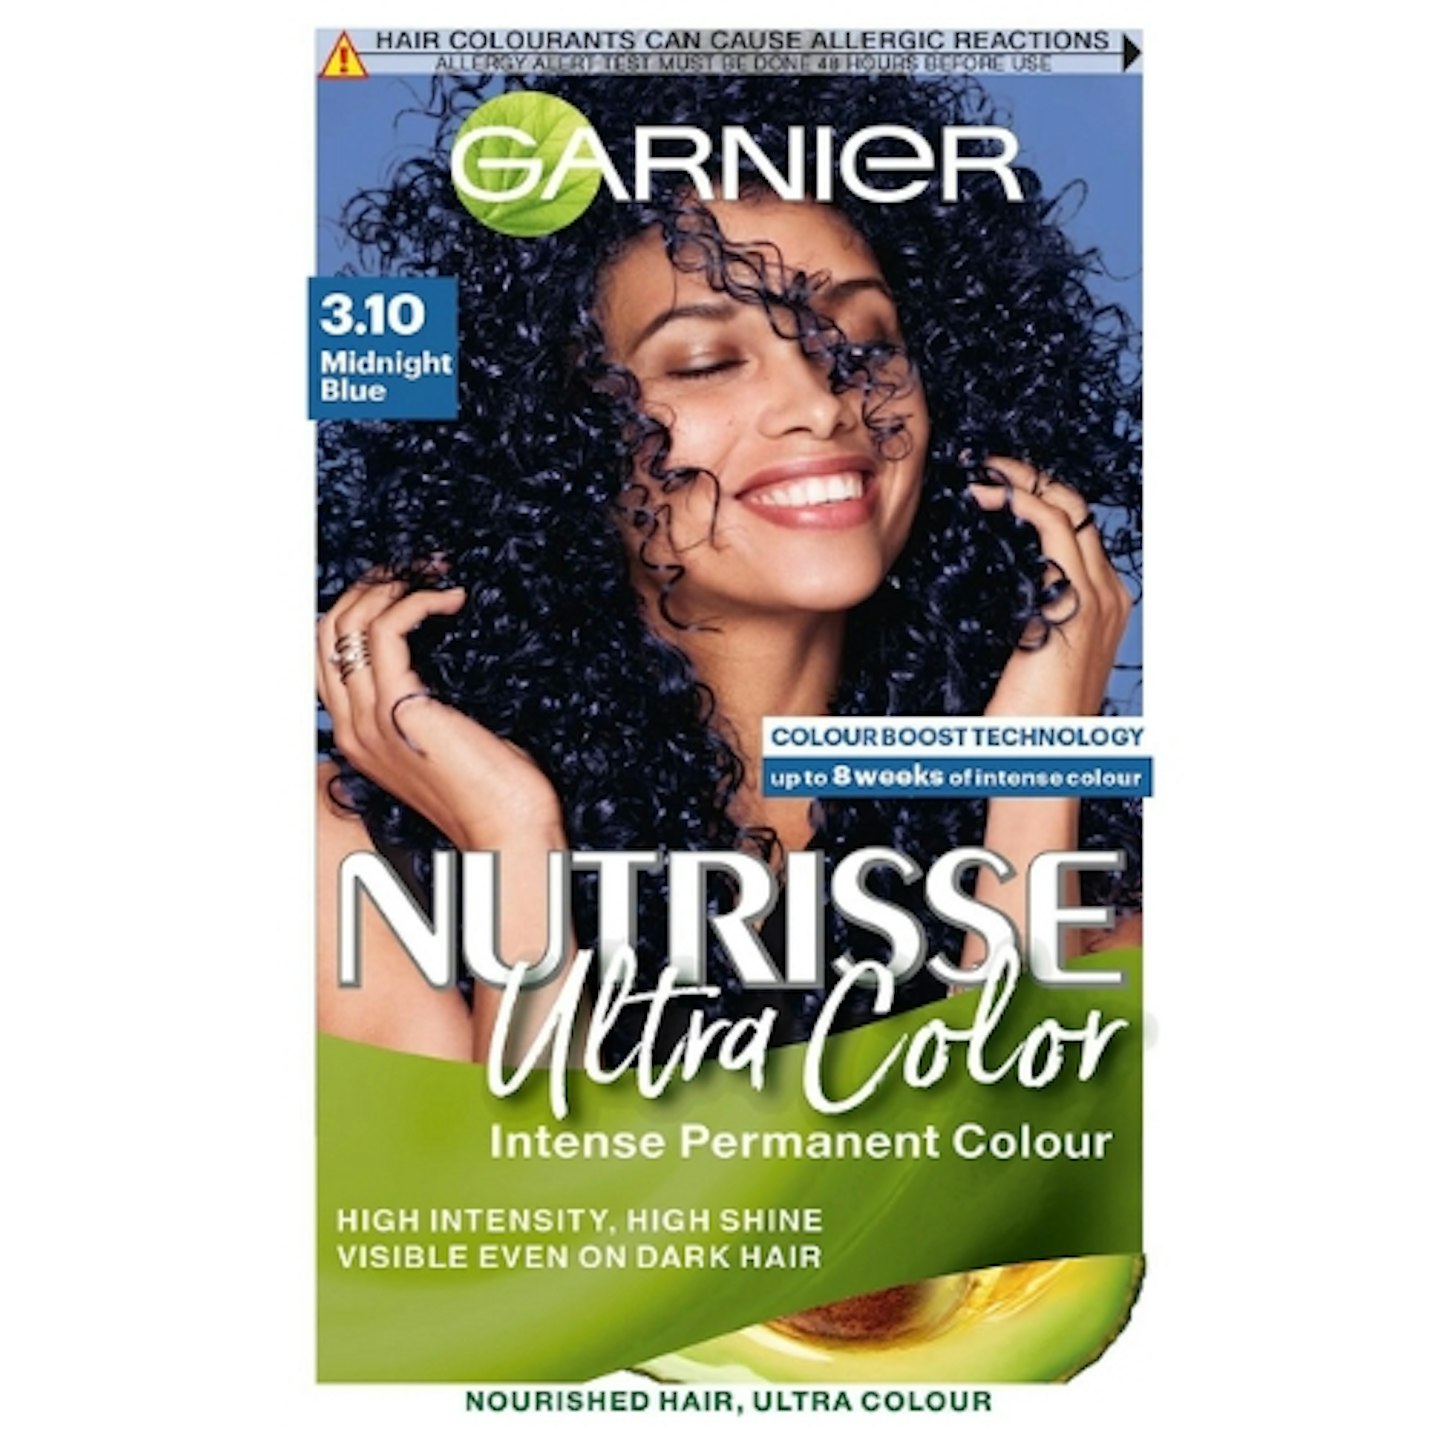 Garnier Nutrisse Ultra Color, Permanent Hair Dye, Intense Colour 3.10 Midnight Blue